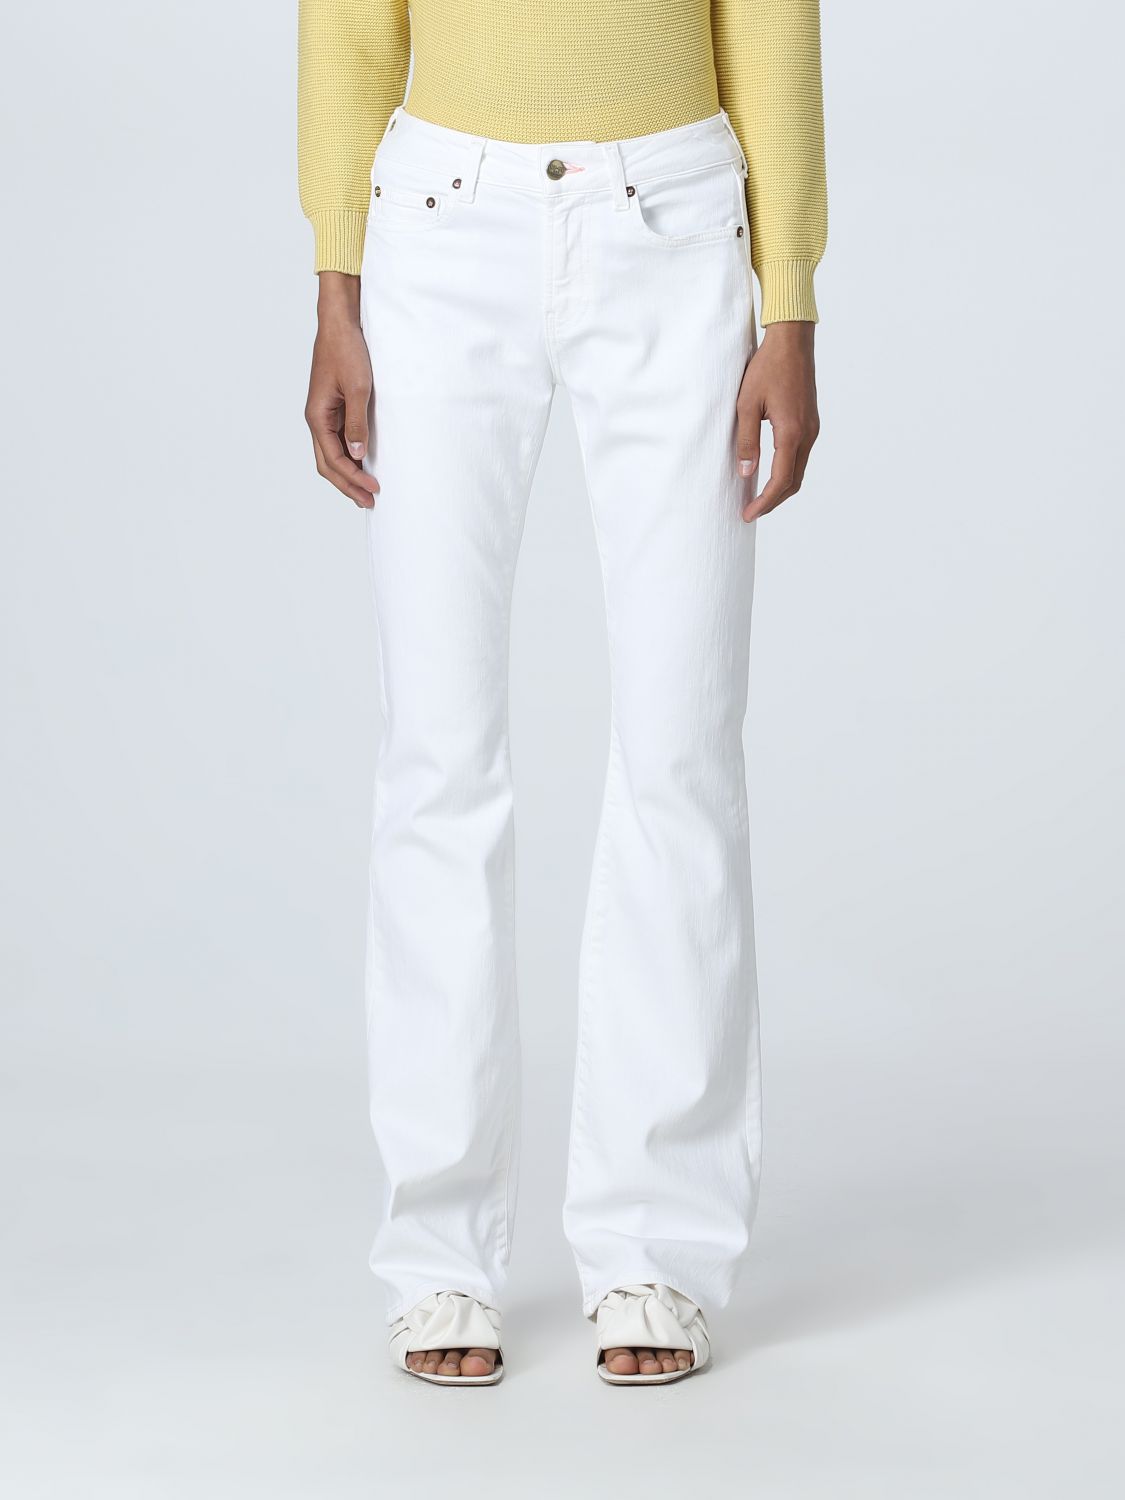 Washington Dee Cee Rhinestone-detail High Waist Jeans In Bianco